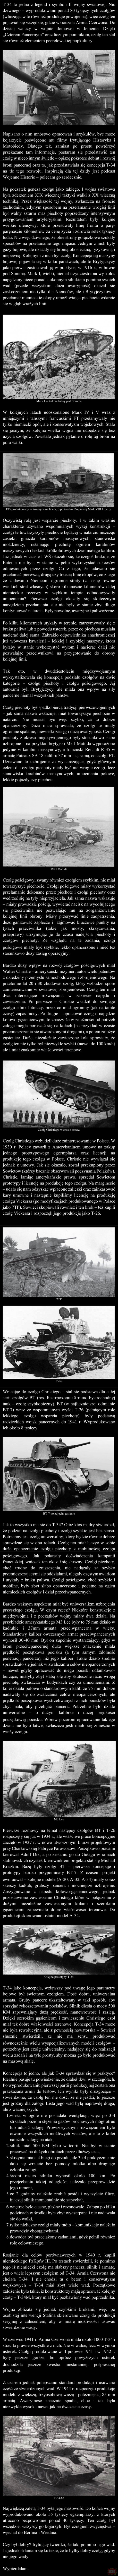 T-34. Geneza i rozwój.